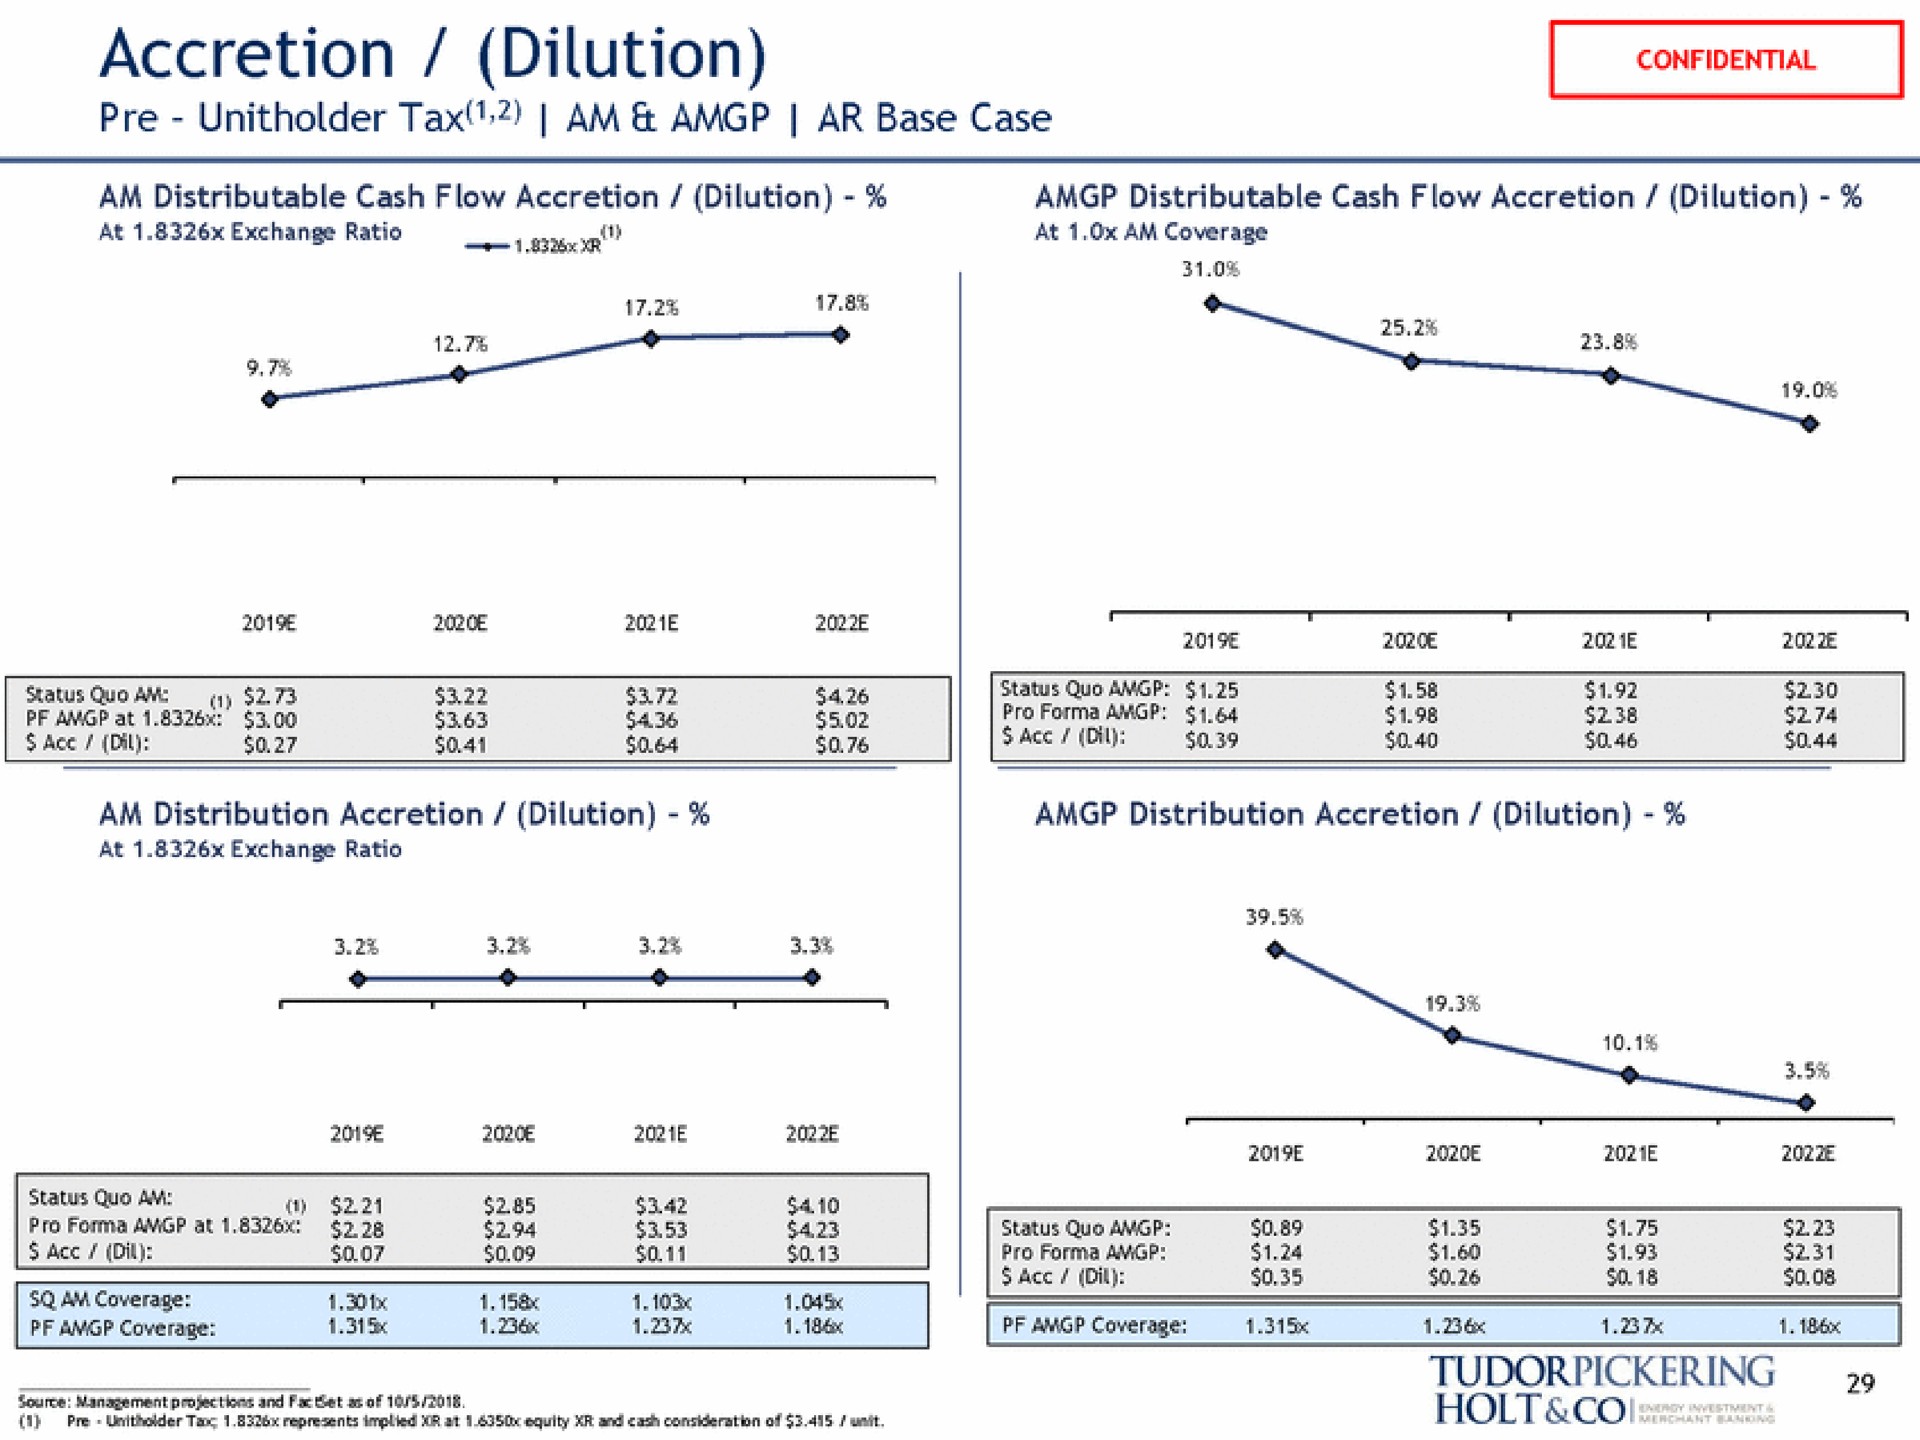 accretion dilution tax am base case | Tudor, Pickering, Holt & Co